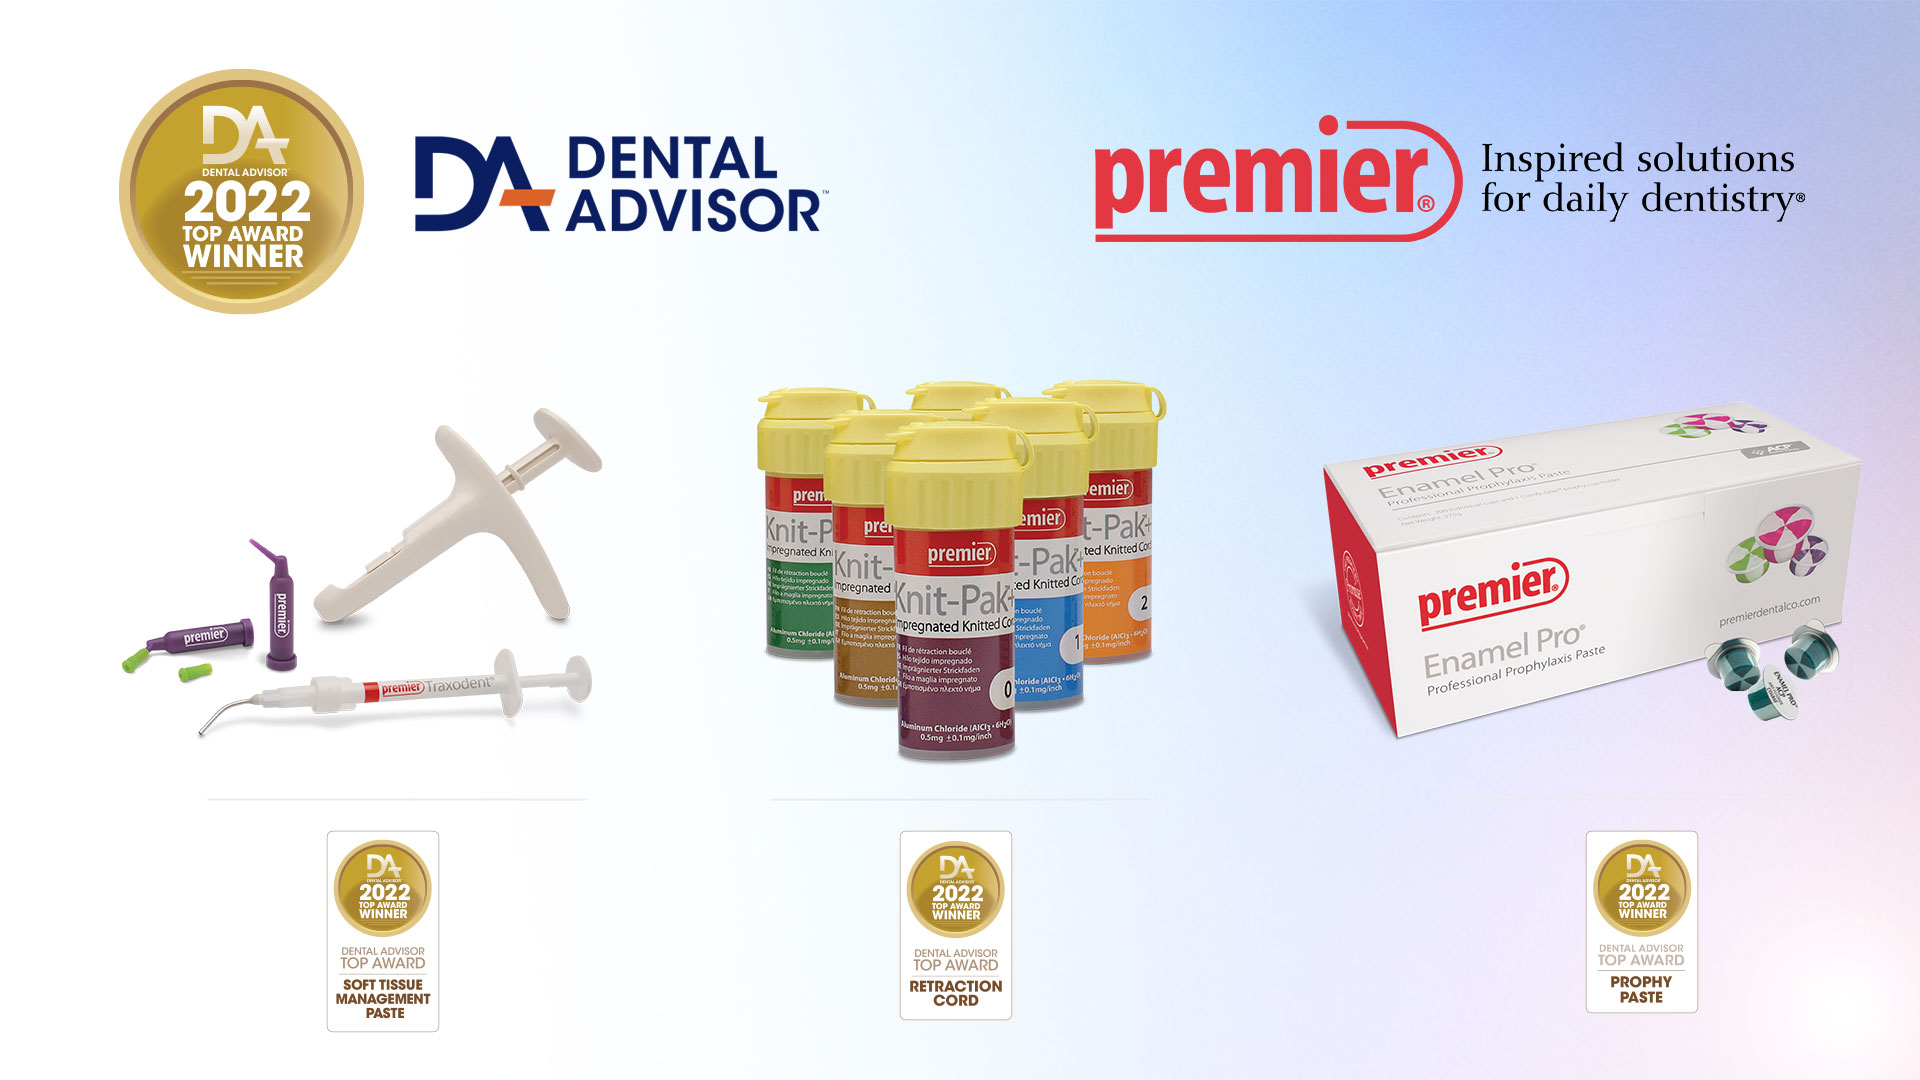 Dental Advisor Top Award Winners: Traxodent, Knit-Pak, and Enamel Pro